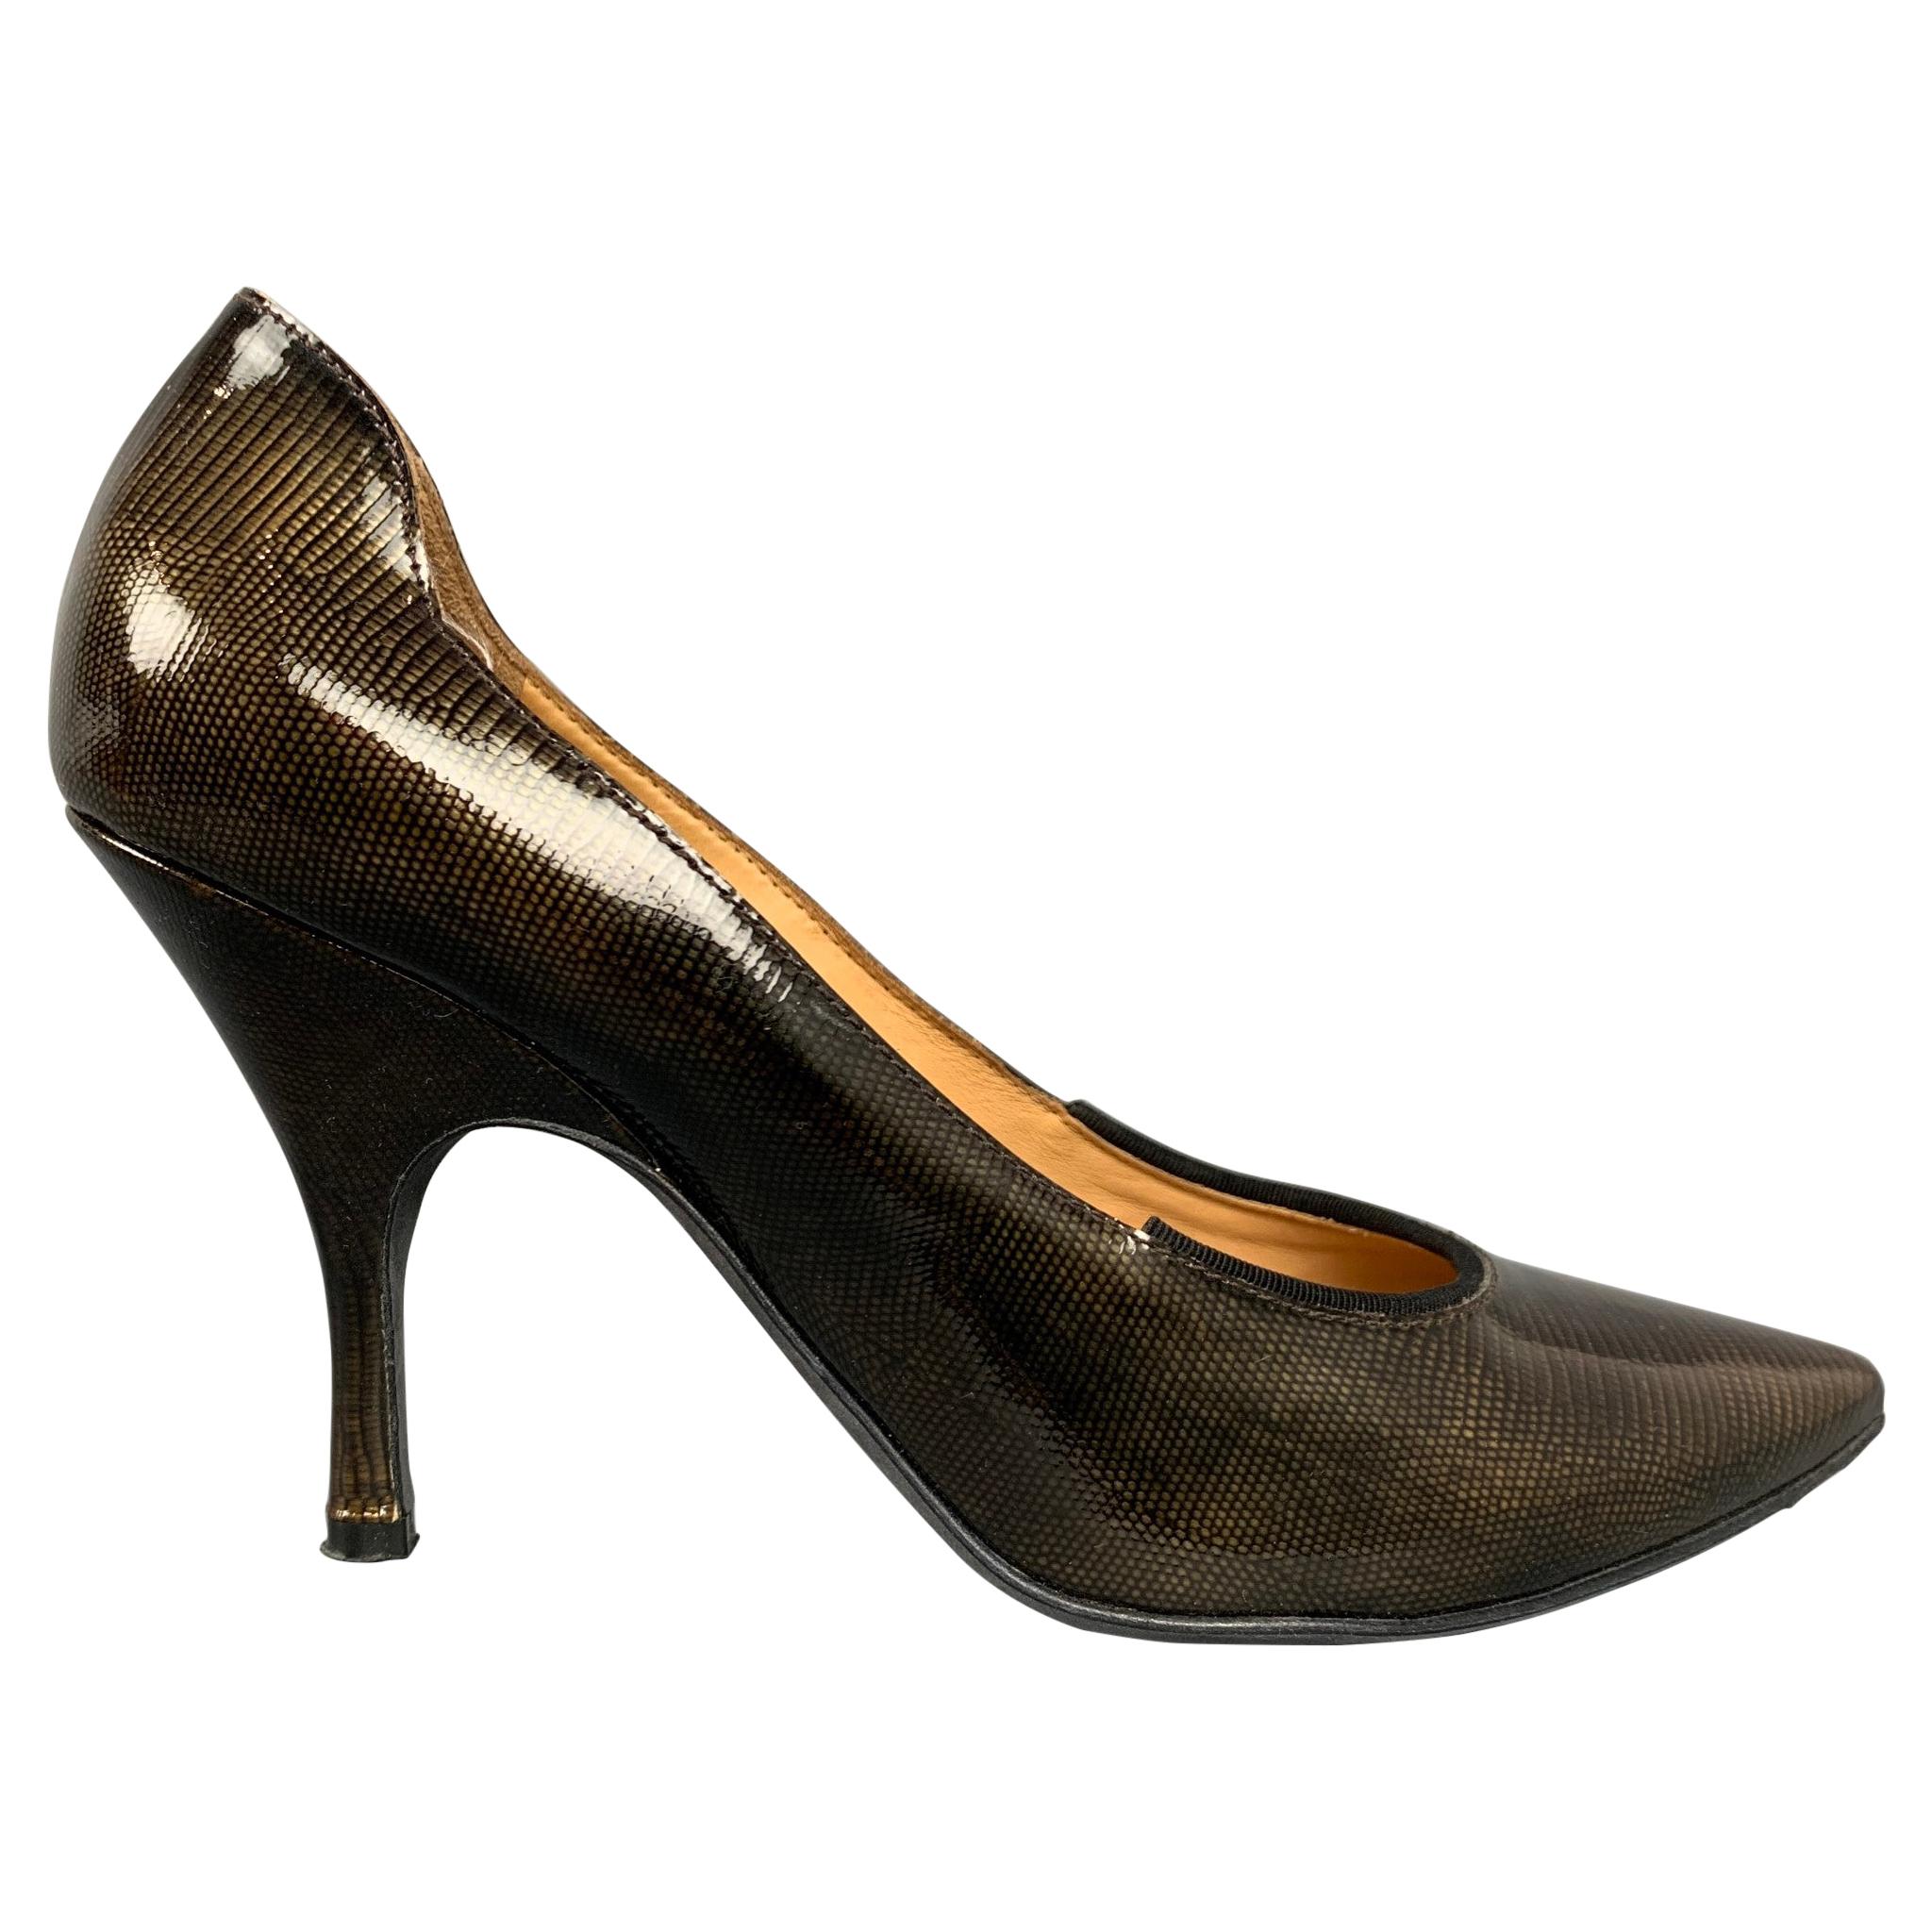 LANVIN for H&M Size 8 Bronze & Black Textured Patent Leather Pumps